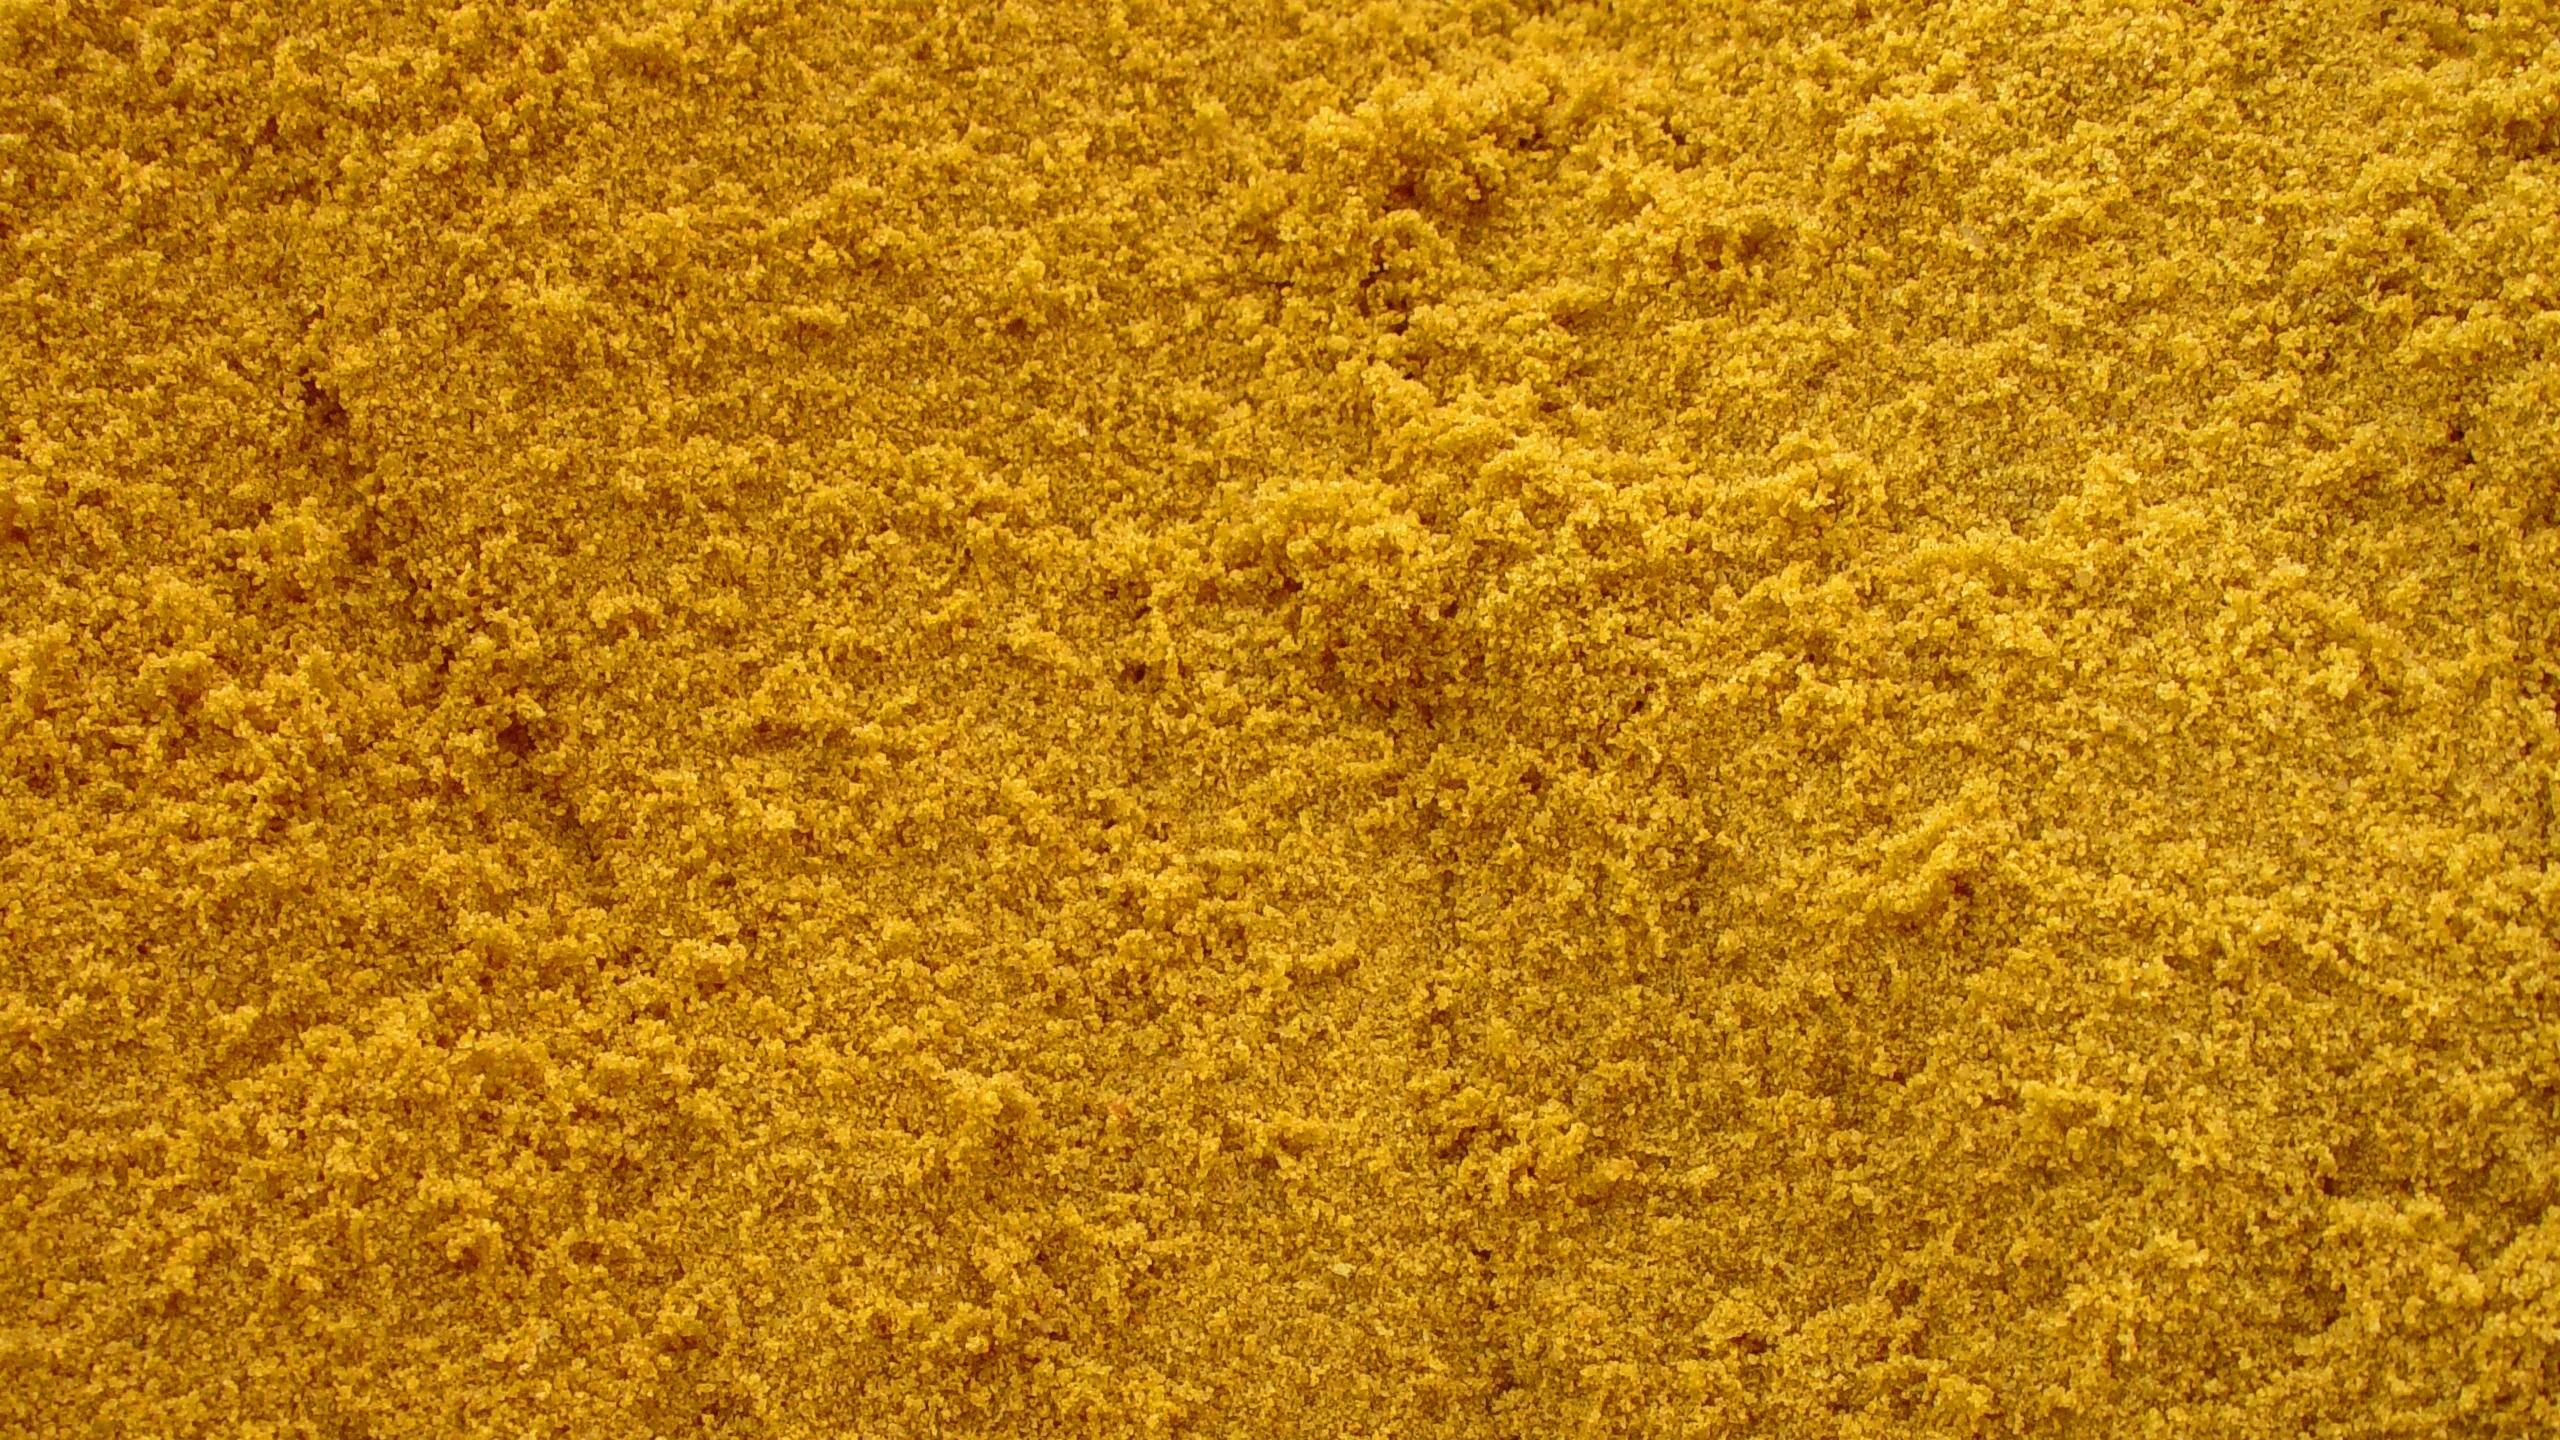 goldan tapete,gelb,würze,curry pulver,muster,mehrjährige pflanze